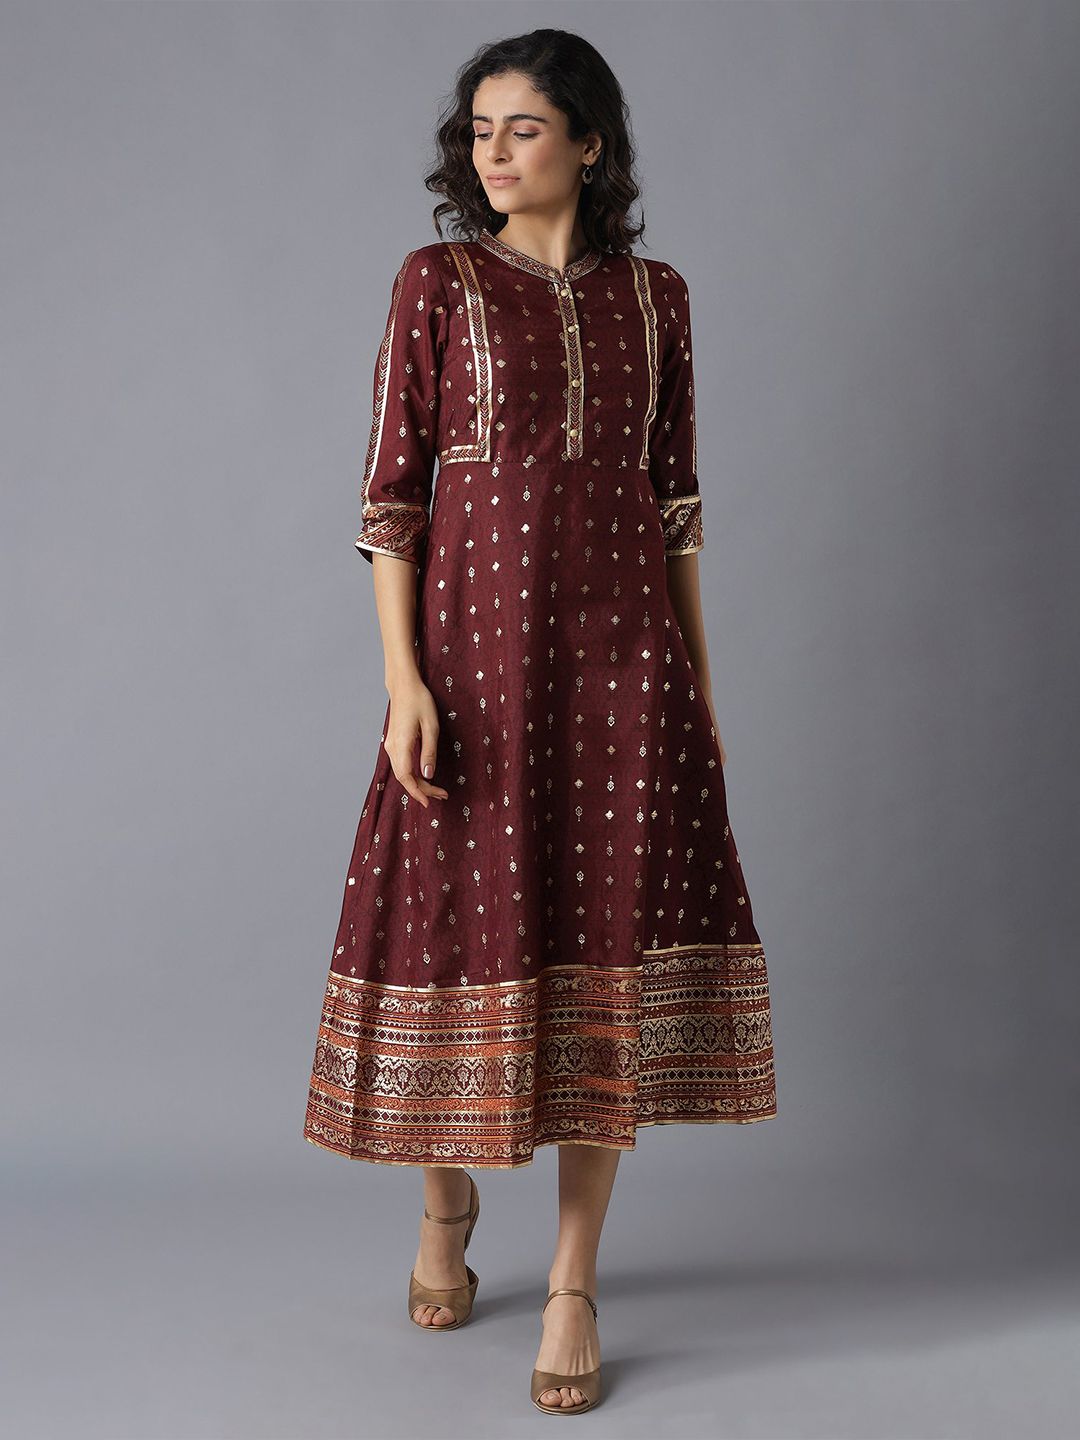 AURELIA Maroon And Gold Ethnic Motifs A-Line Midi Dress Price in India